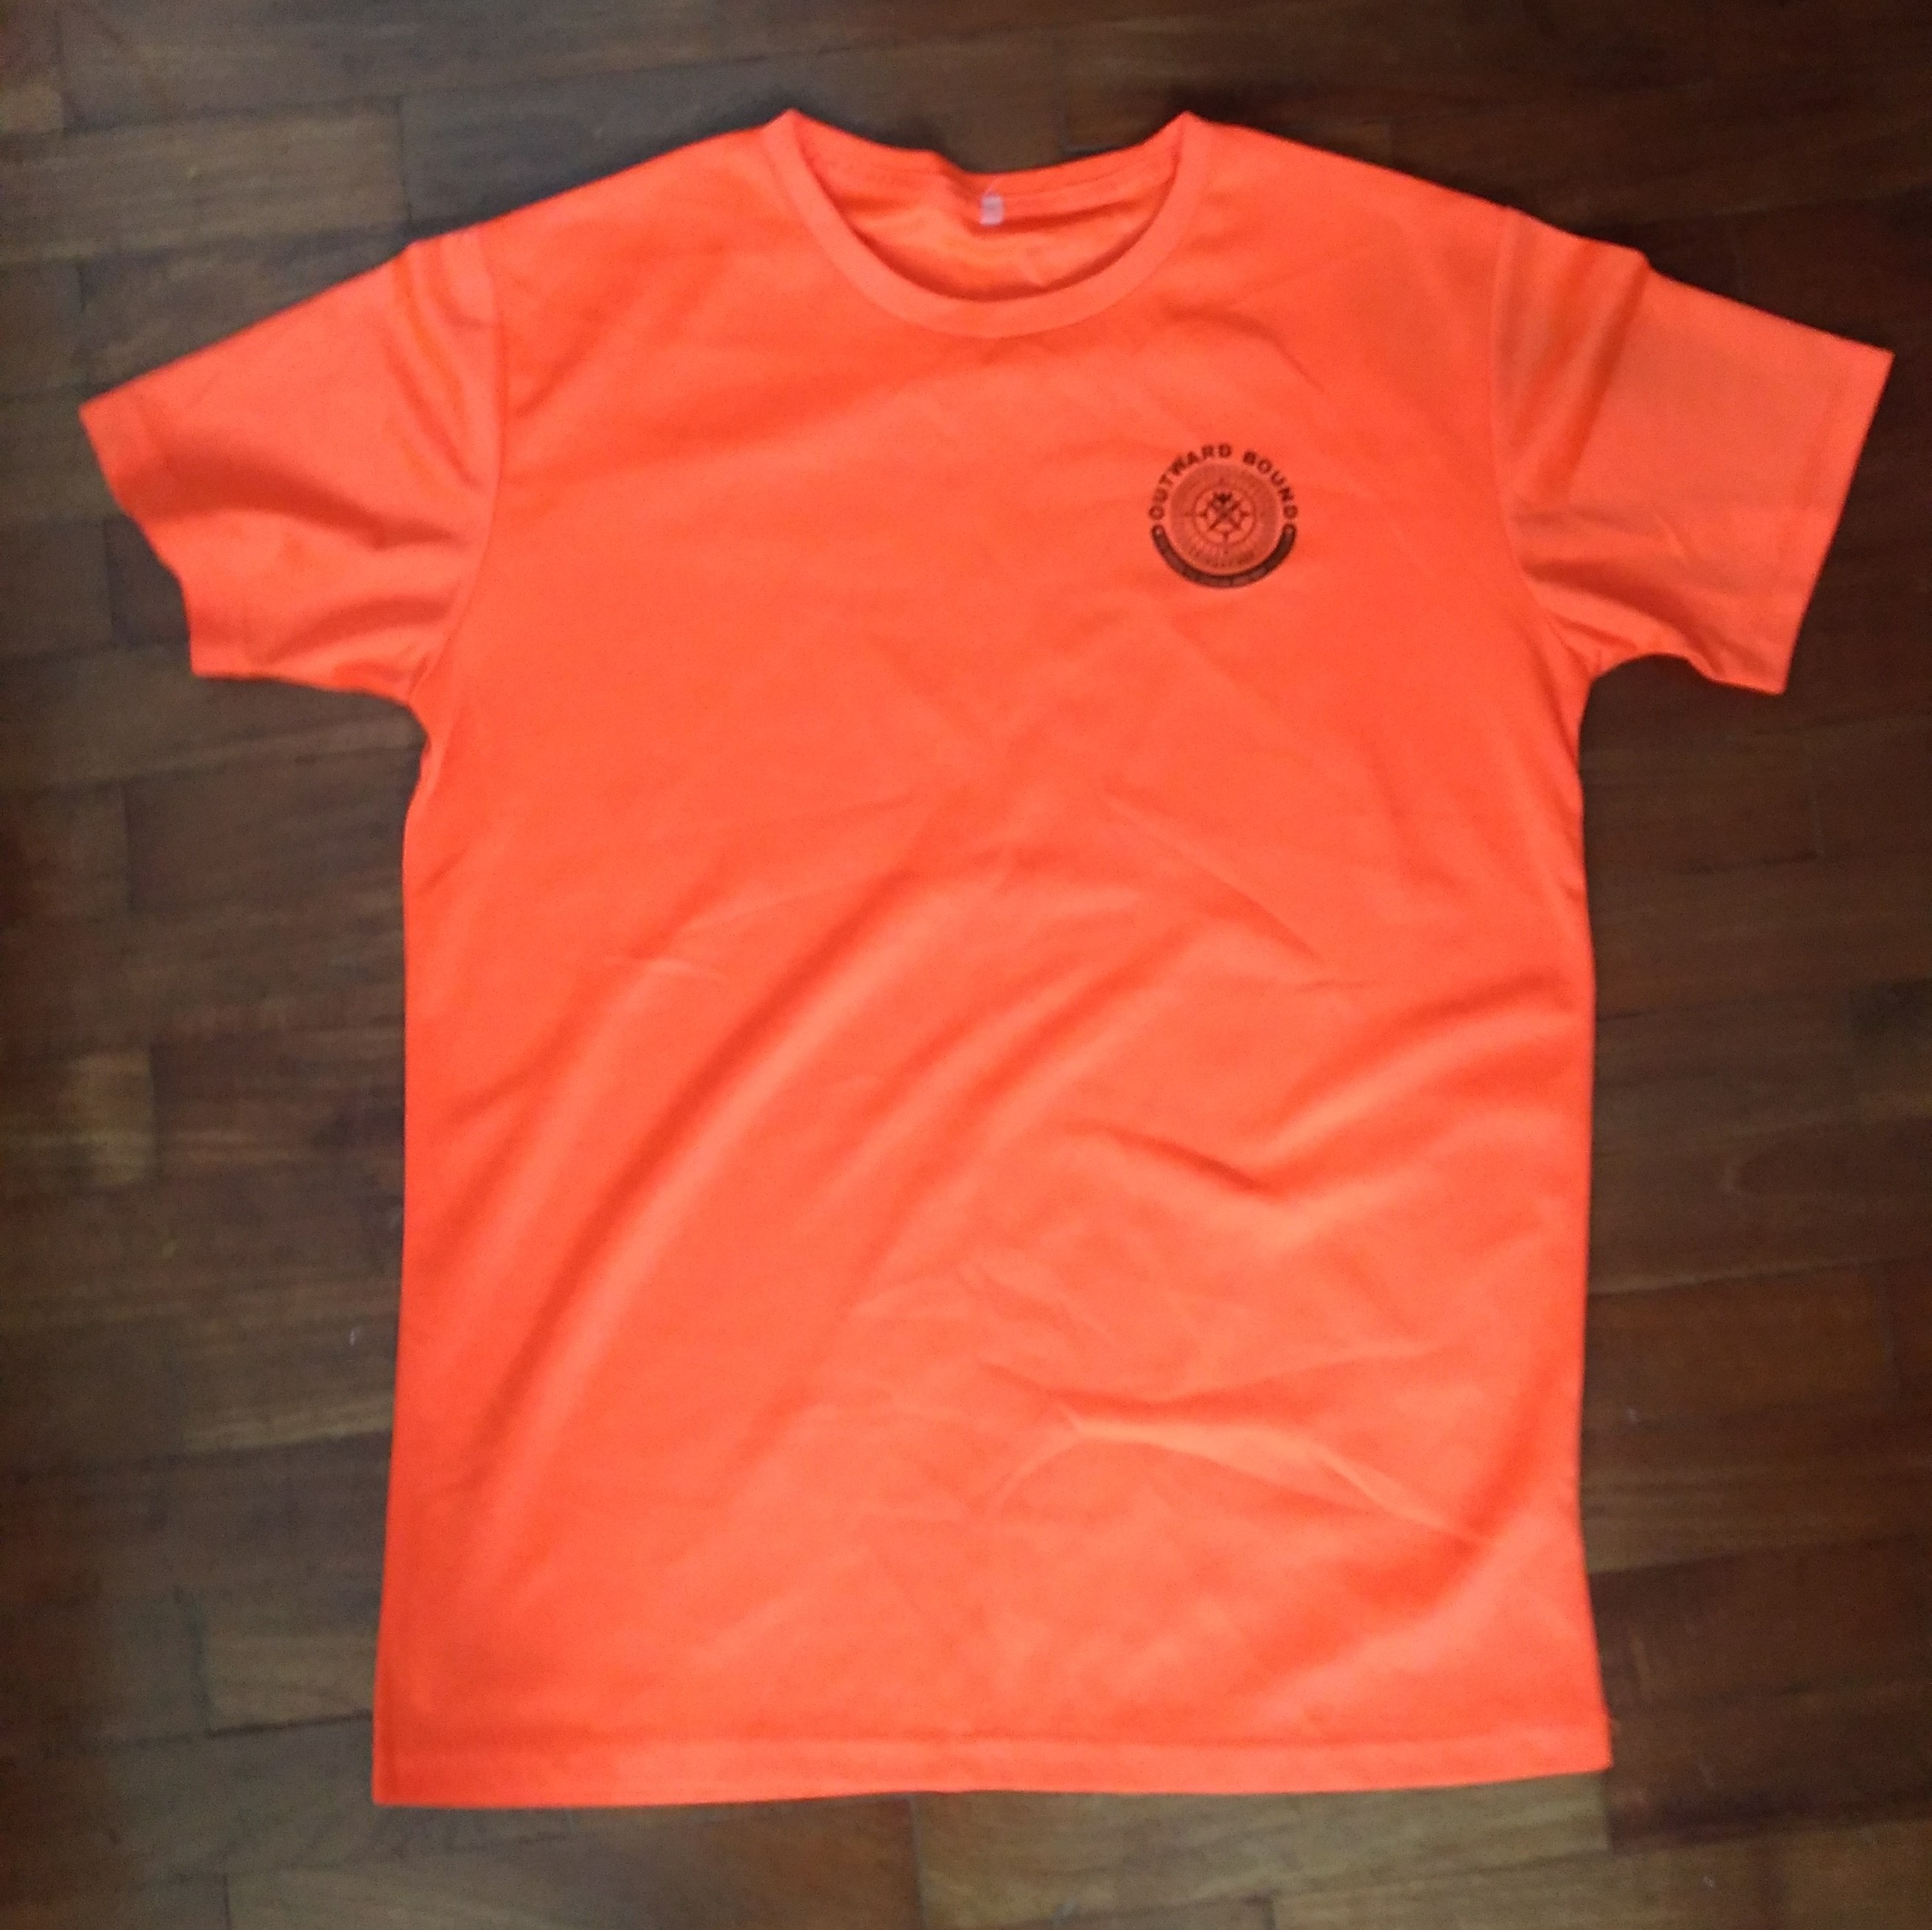 Outward Bound Singapore (OBS) Neon Orange Dri-fit T-Shirt, Men's ...